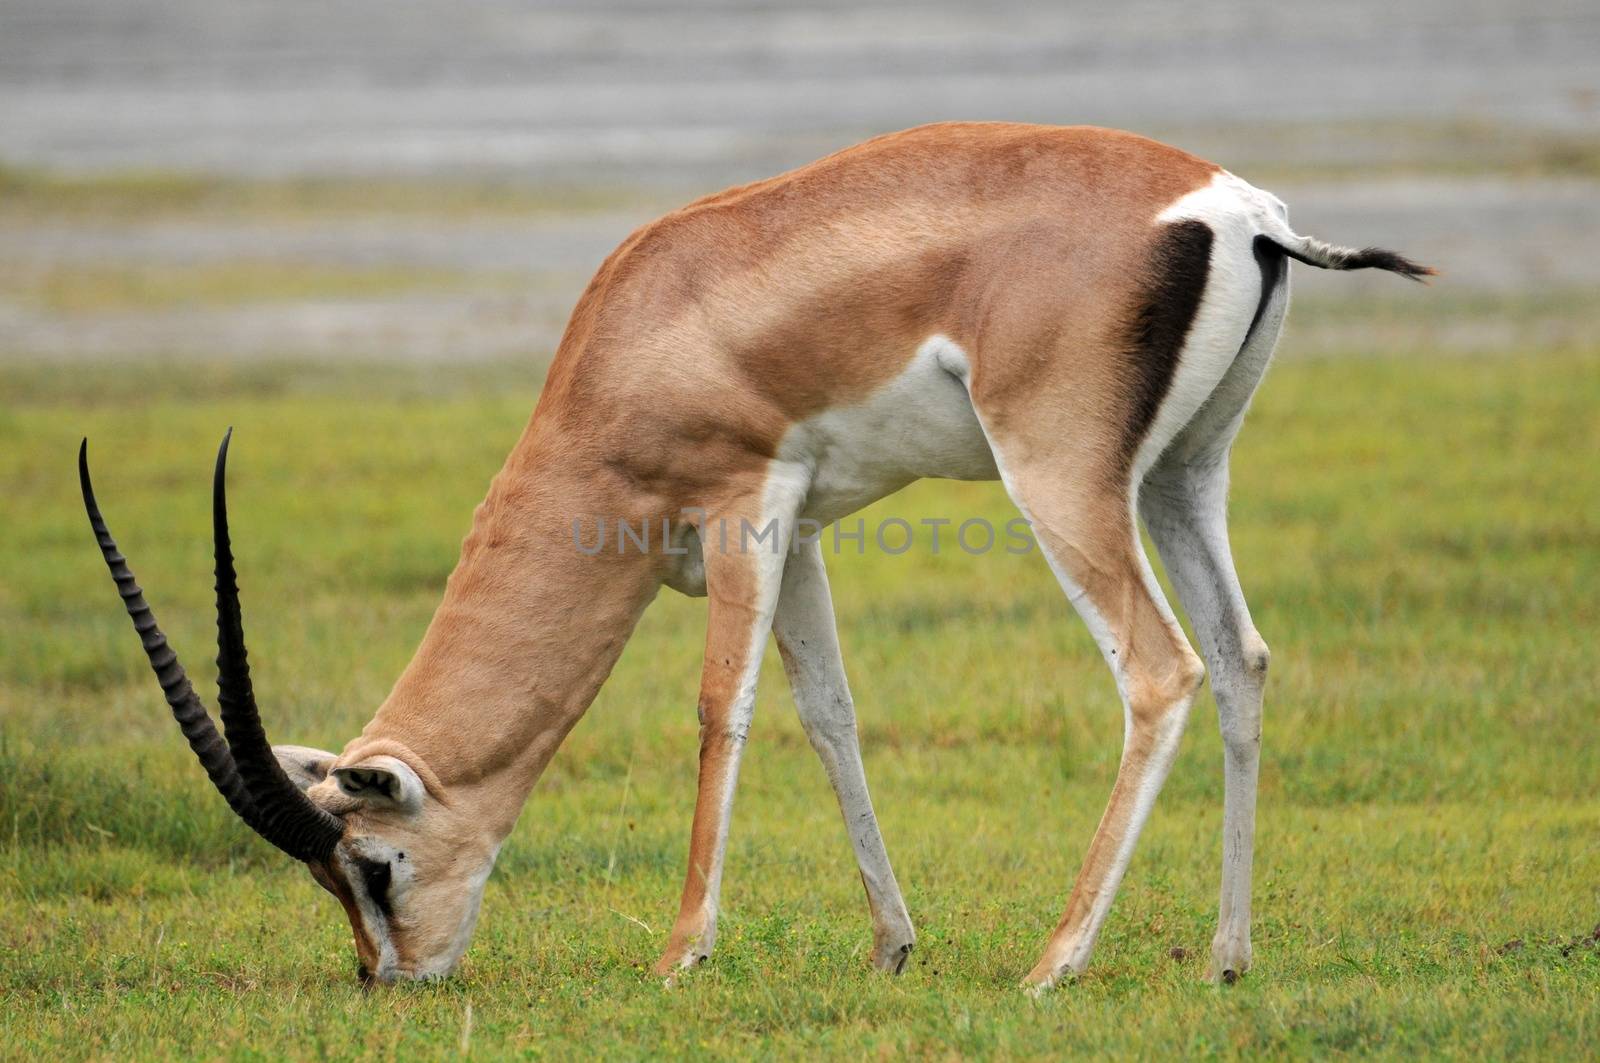 impala in national park Tanzania by moizhusein